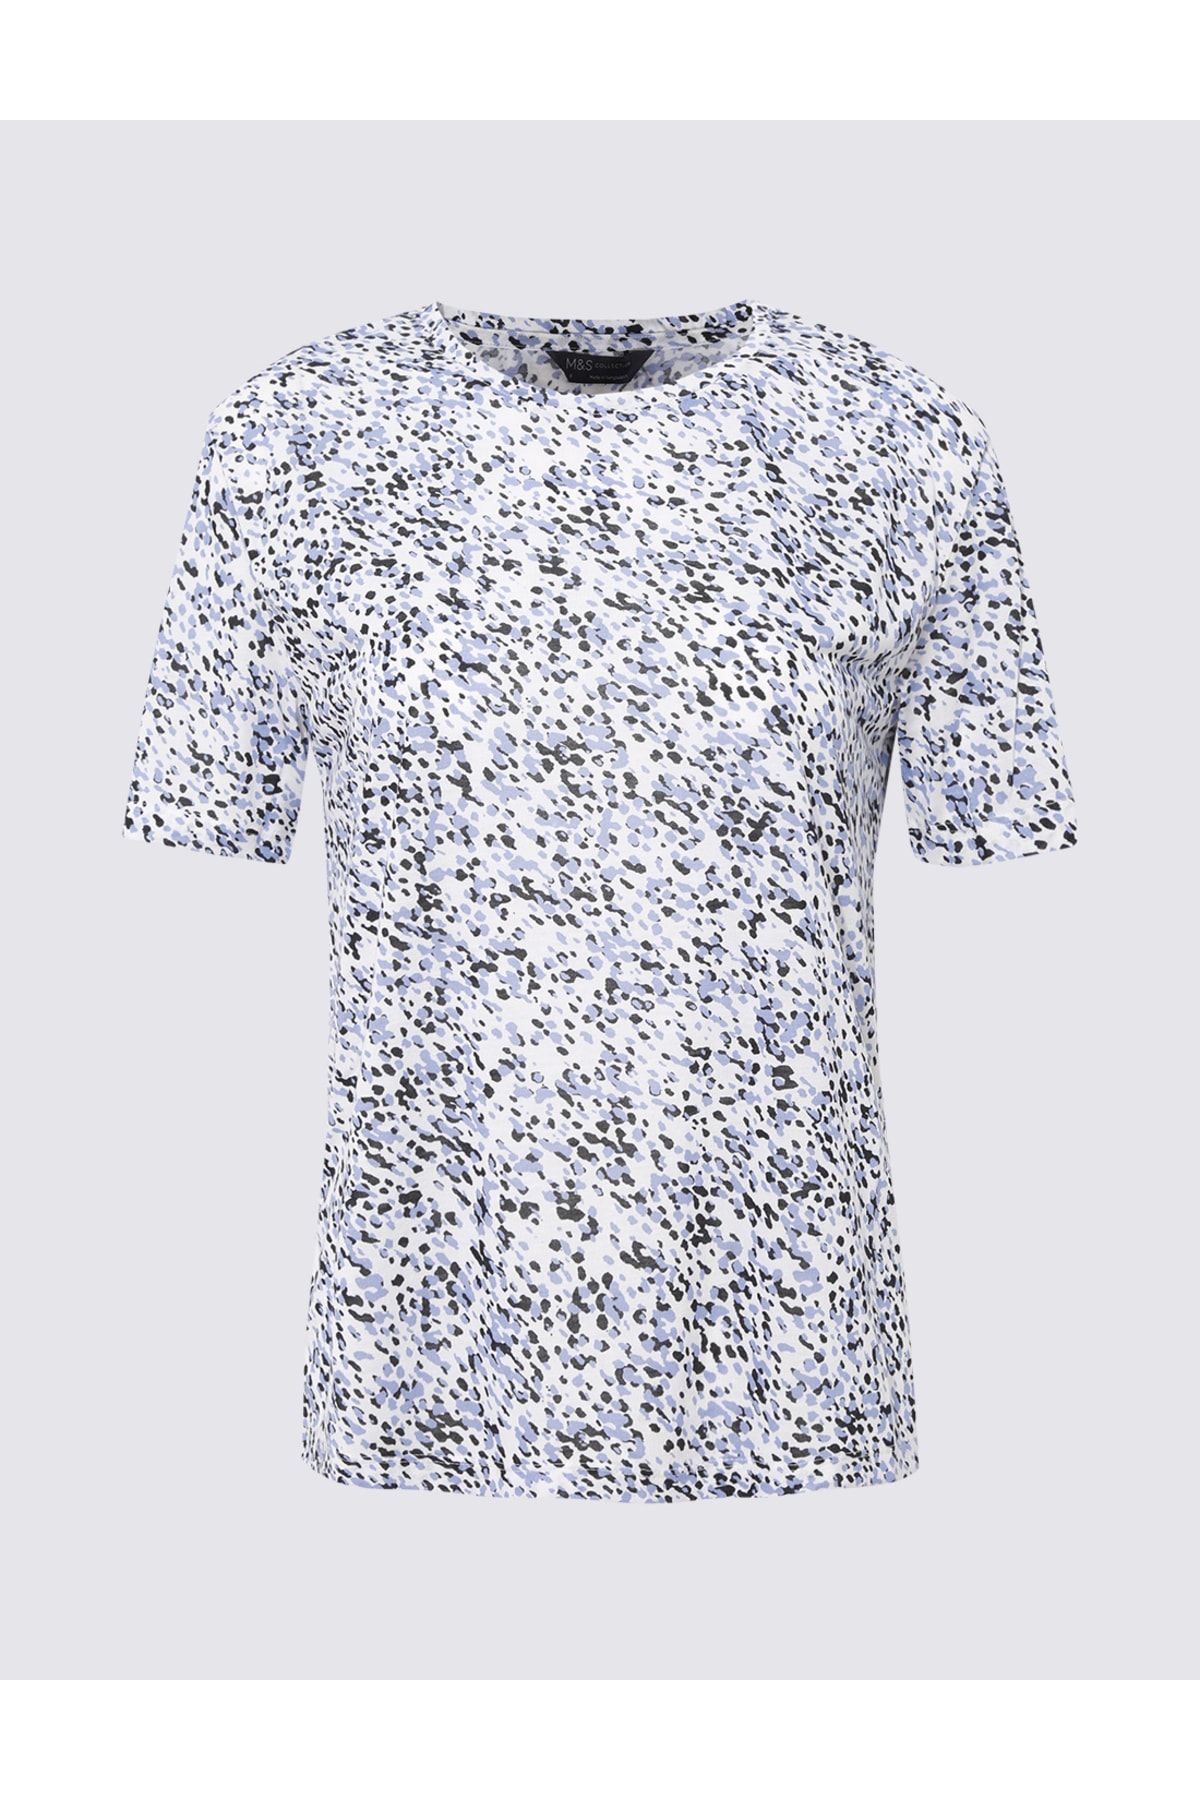 Marks & Spencer Relaxed Fit Kısa Kollu T-shirt